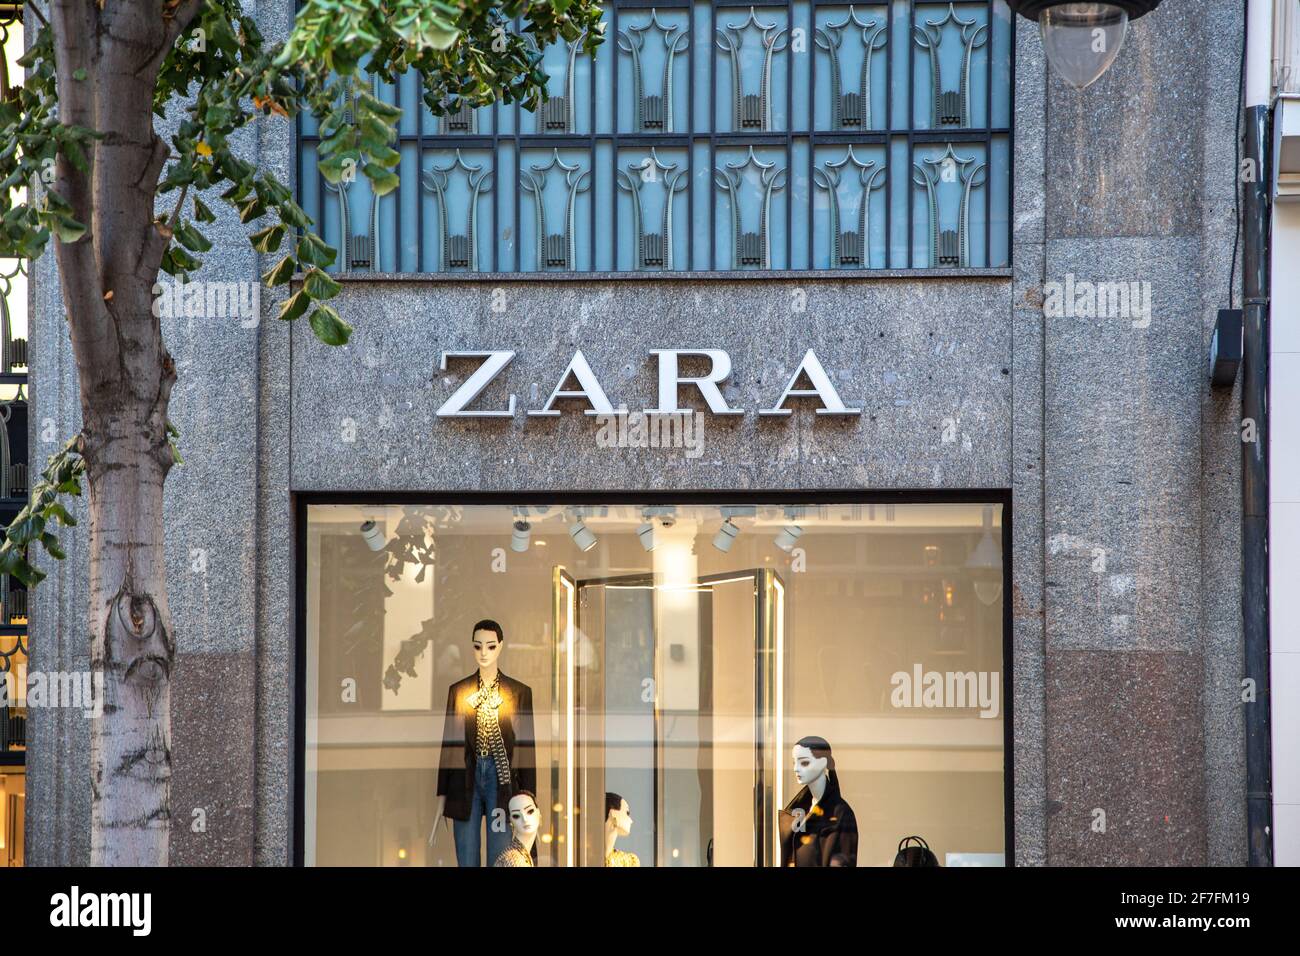 Zara store shop front entrance Stock Photo - Alamy